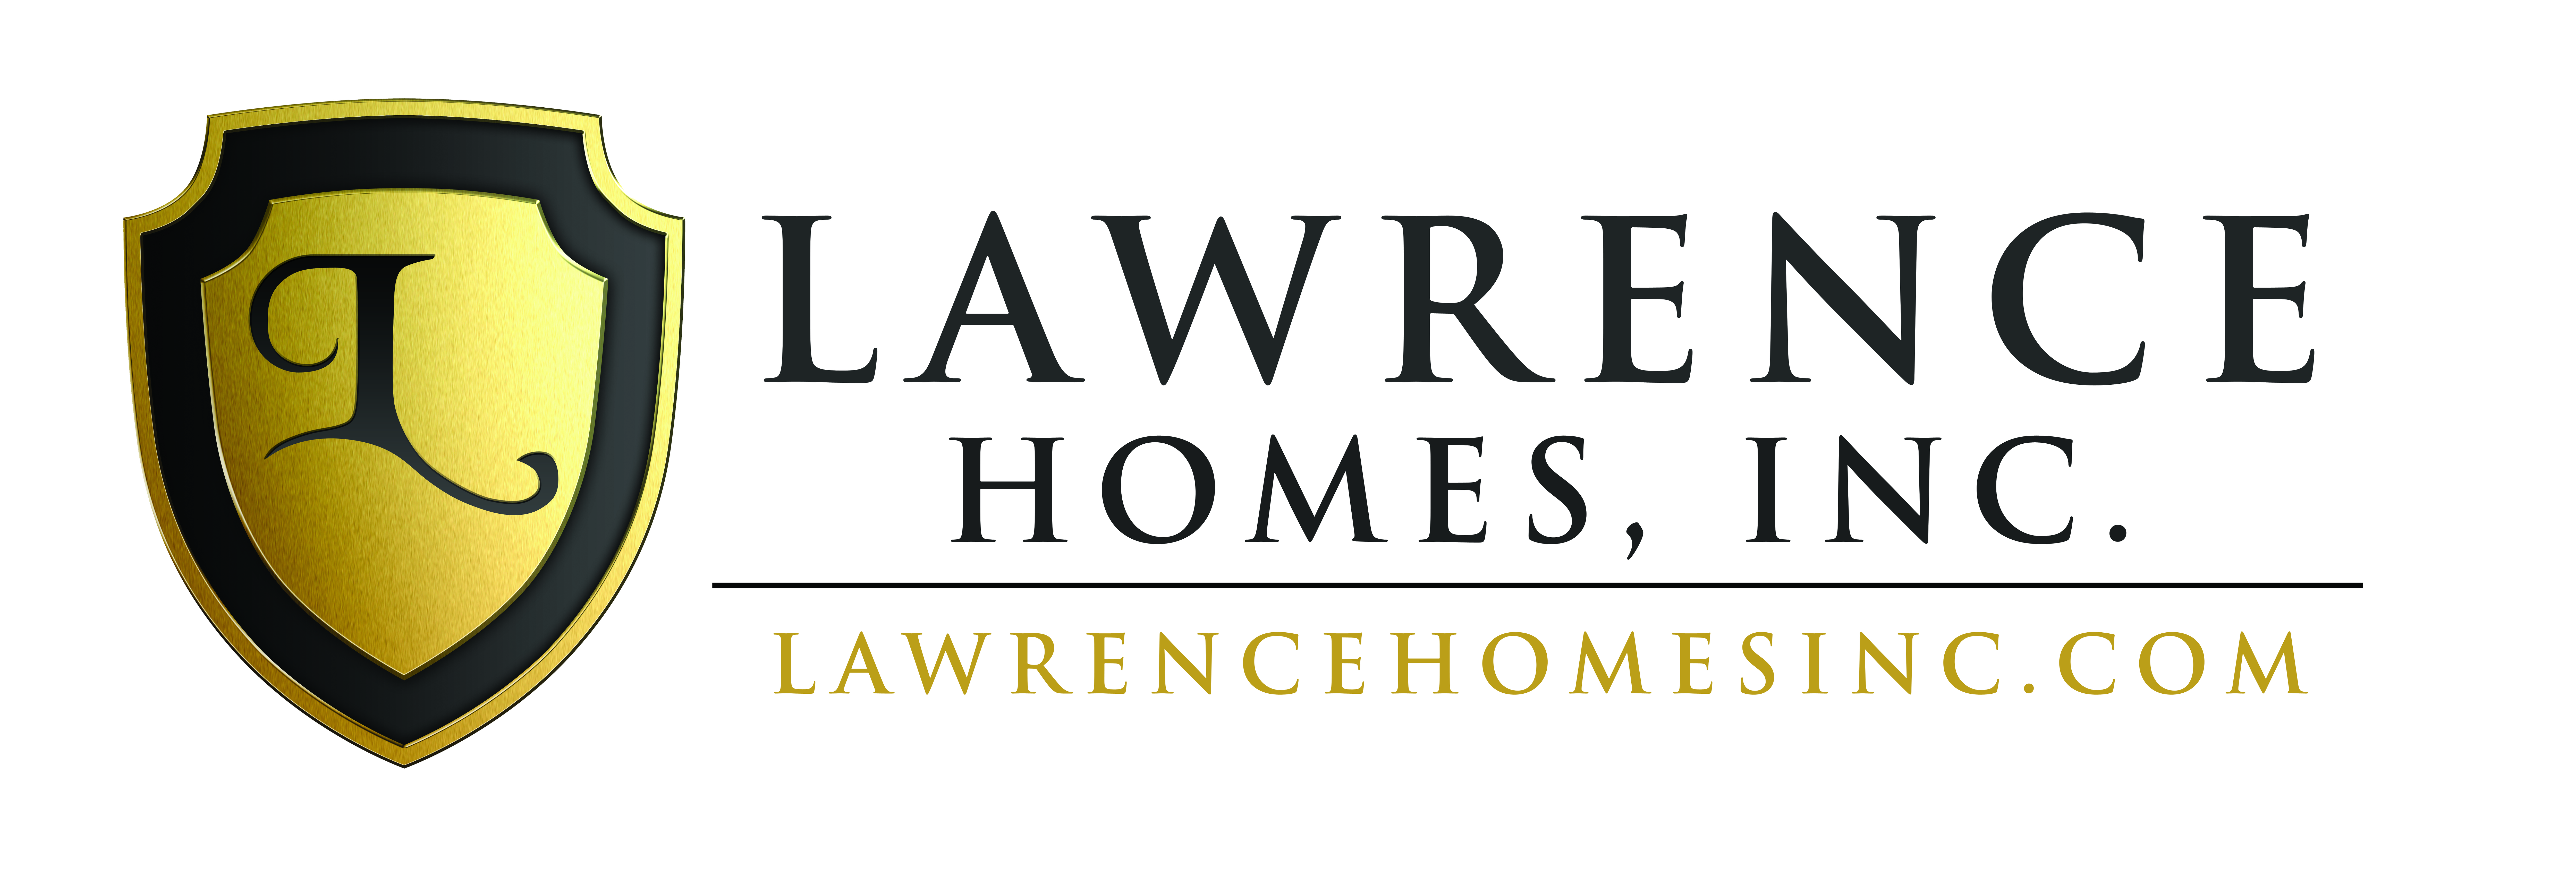 Lawrence Homes, Inc